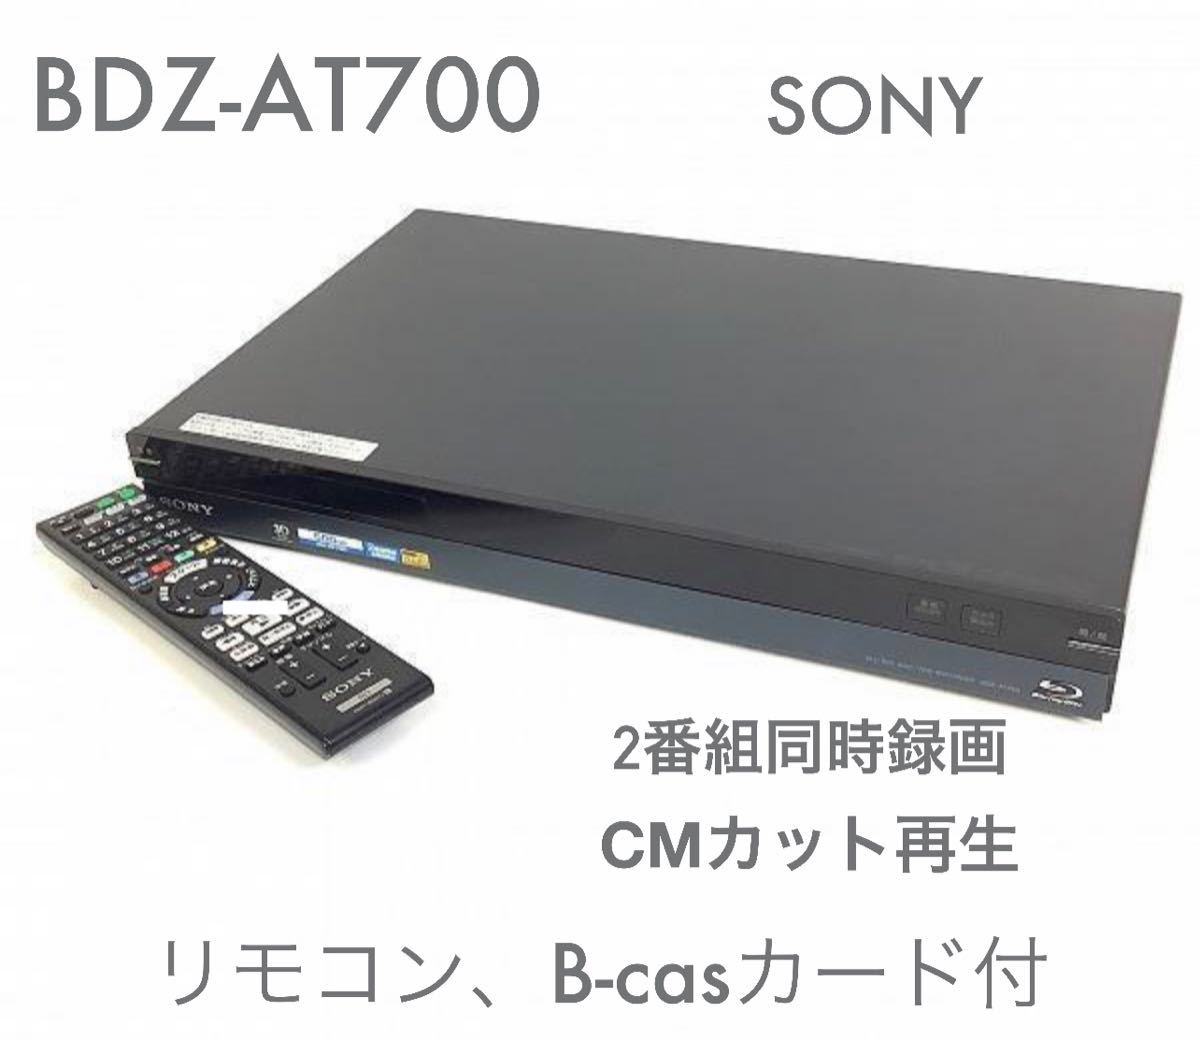 BDZ-AT700 sony HDD 500GB 2番組同時録画/3D対応機｜PayPayフリマ